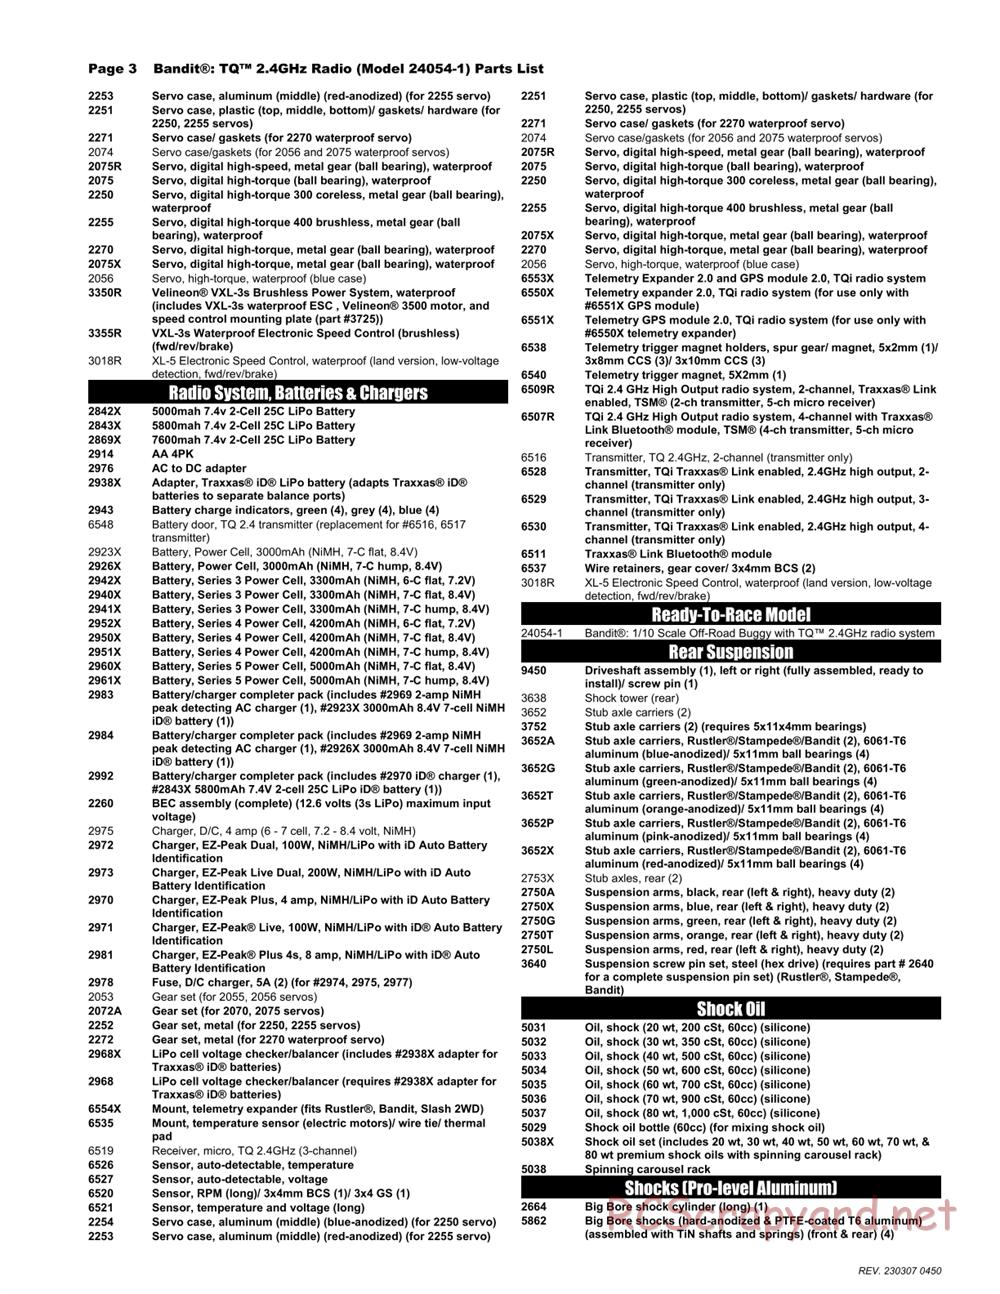 Traxxas - Bandit XL-5 (2015) - Parts List - Page 3